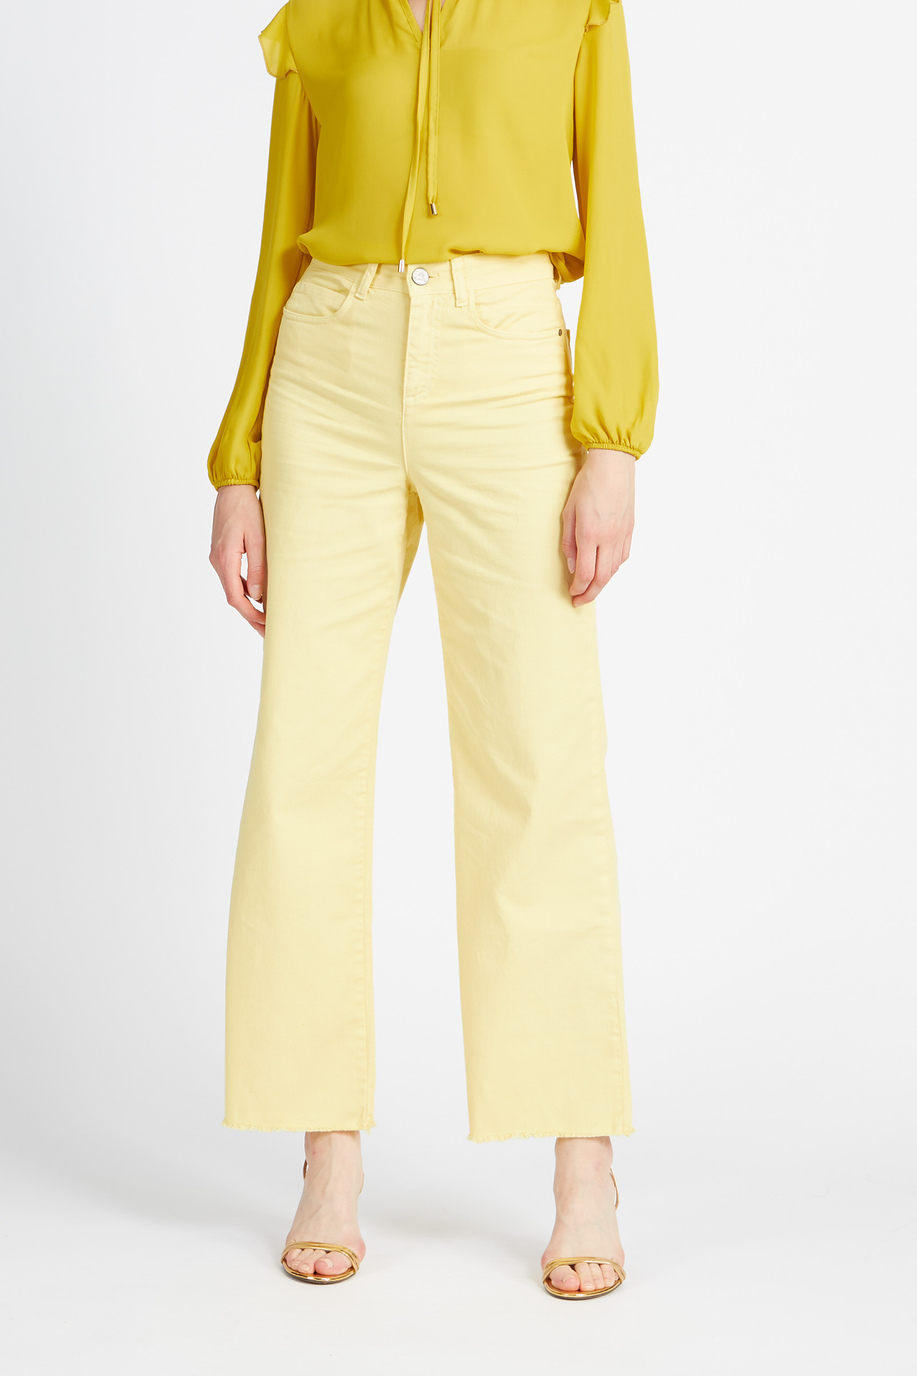 Pantalon jeans femme uni 5 poches Spring Weekend - Villard - Pantalons | La Martina - Official Online Shop